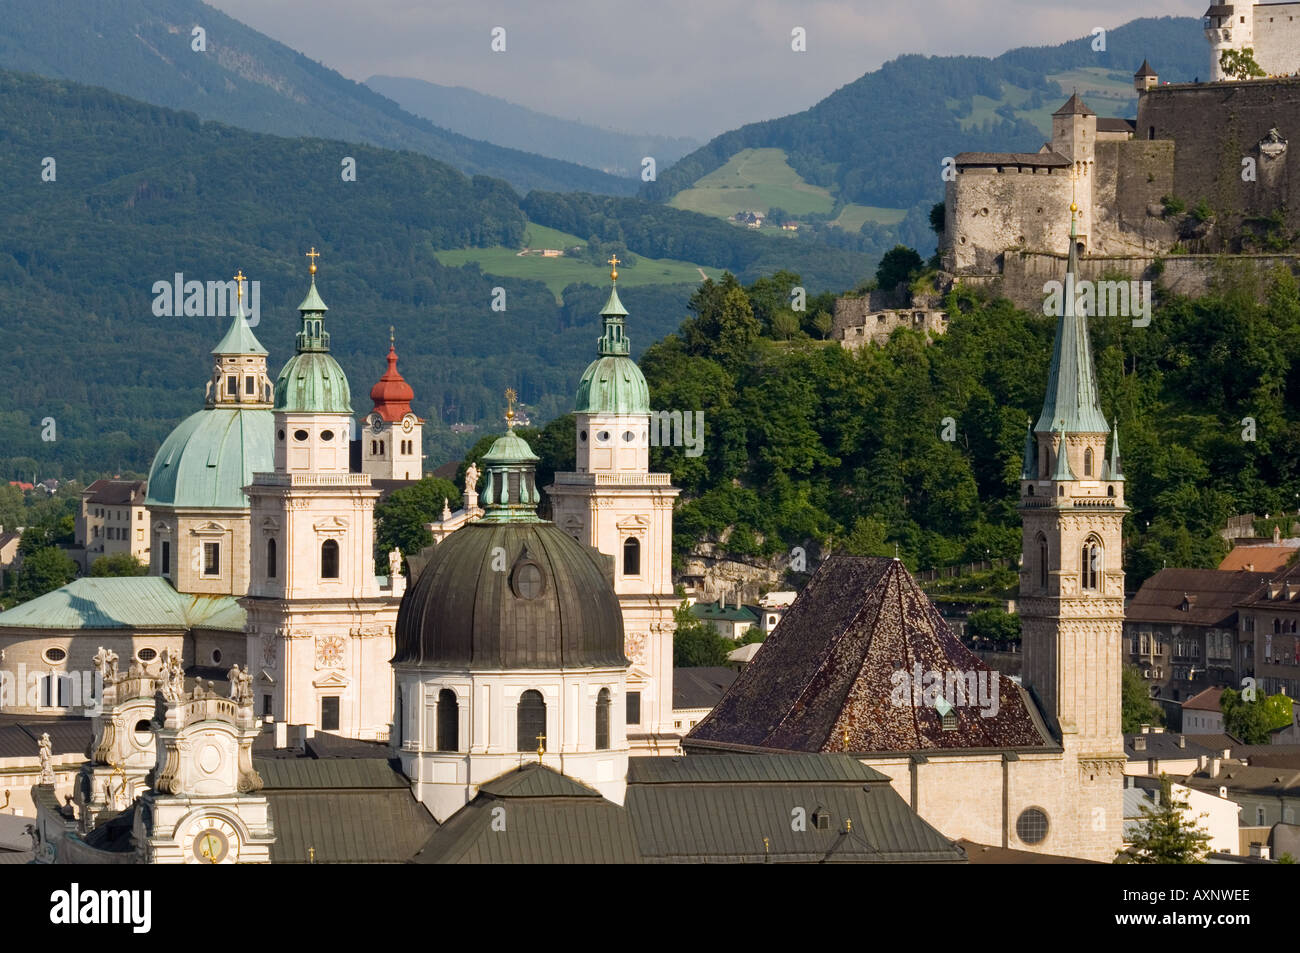 Europe Austria Saltzburg church spires towers Stock Photo